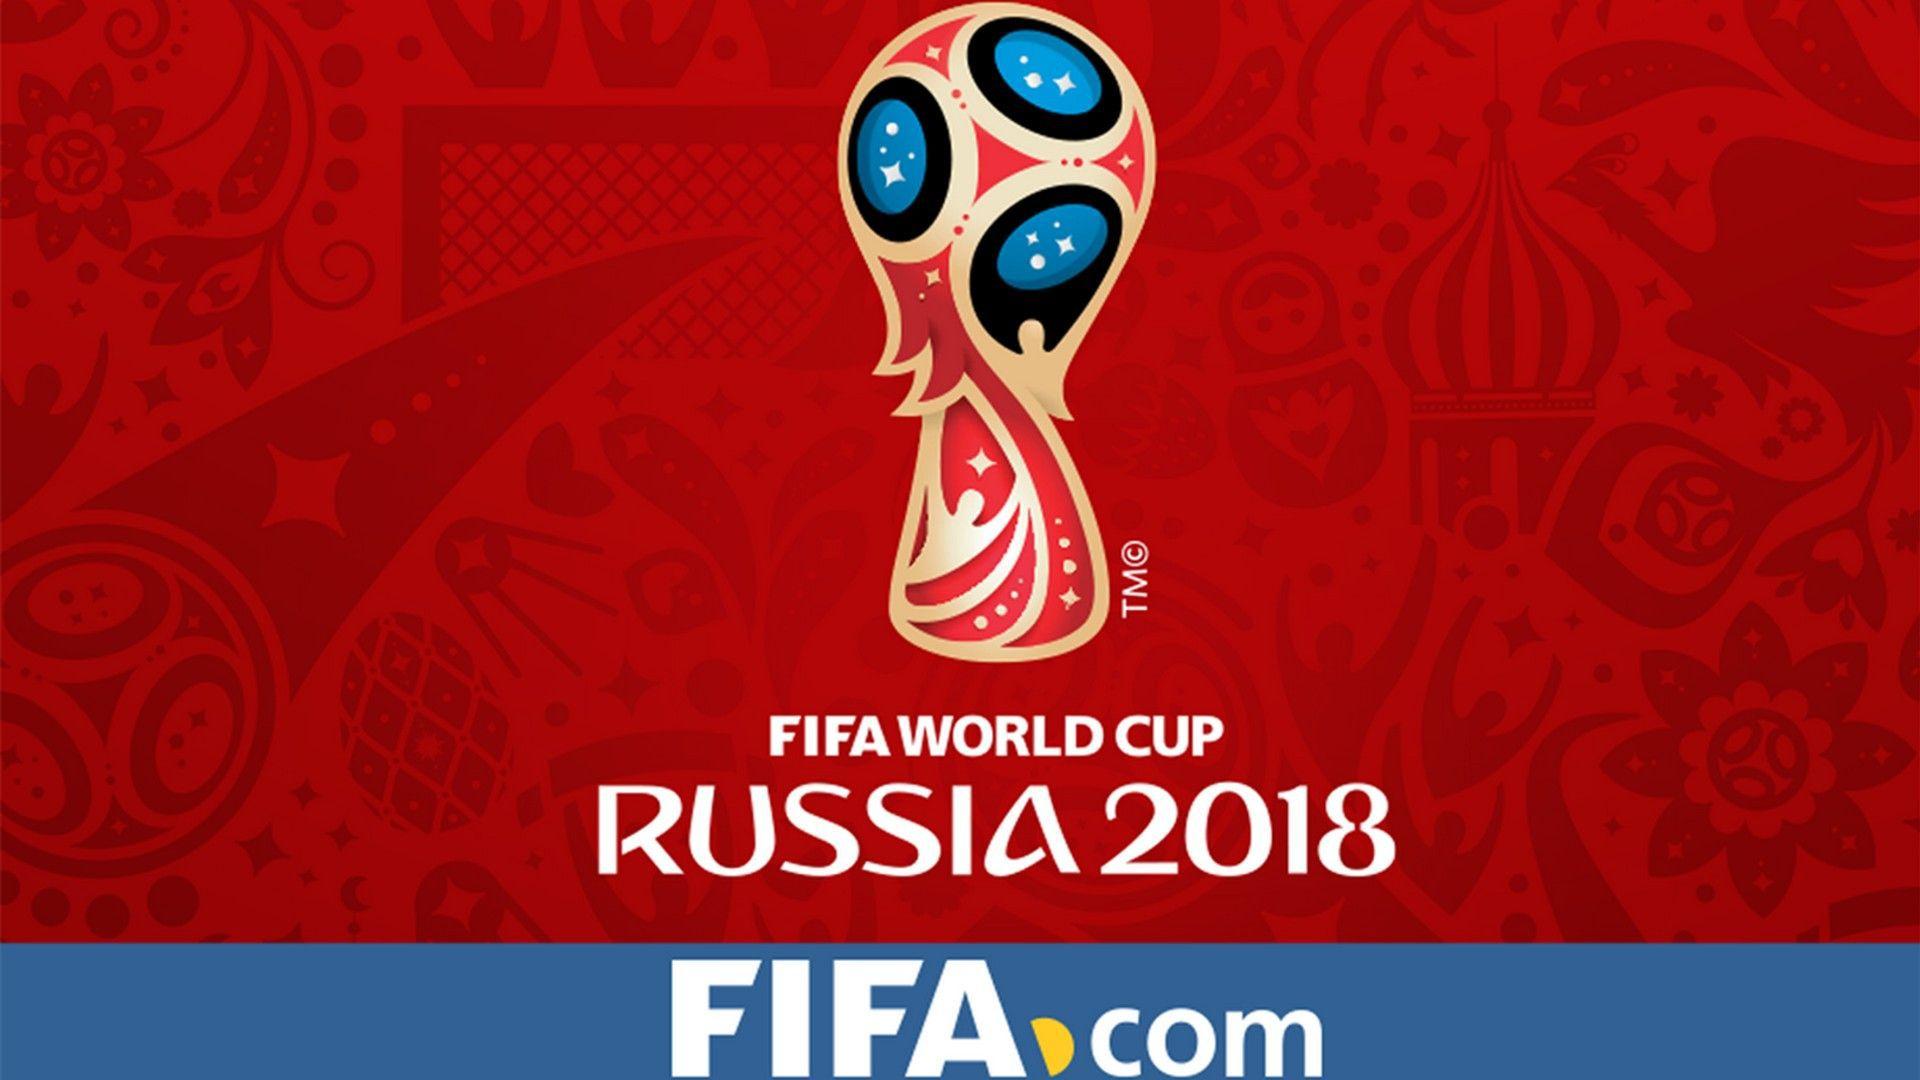 Russia 2018 World Cup Wallpaper 1 Ki Tabeer